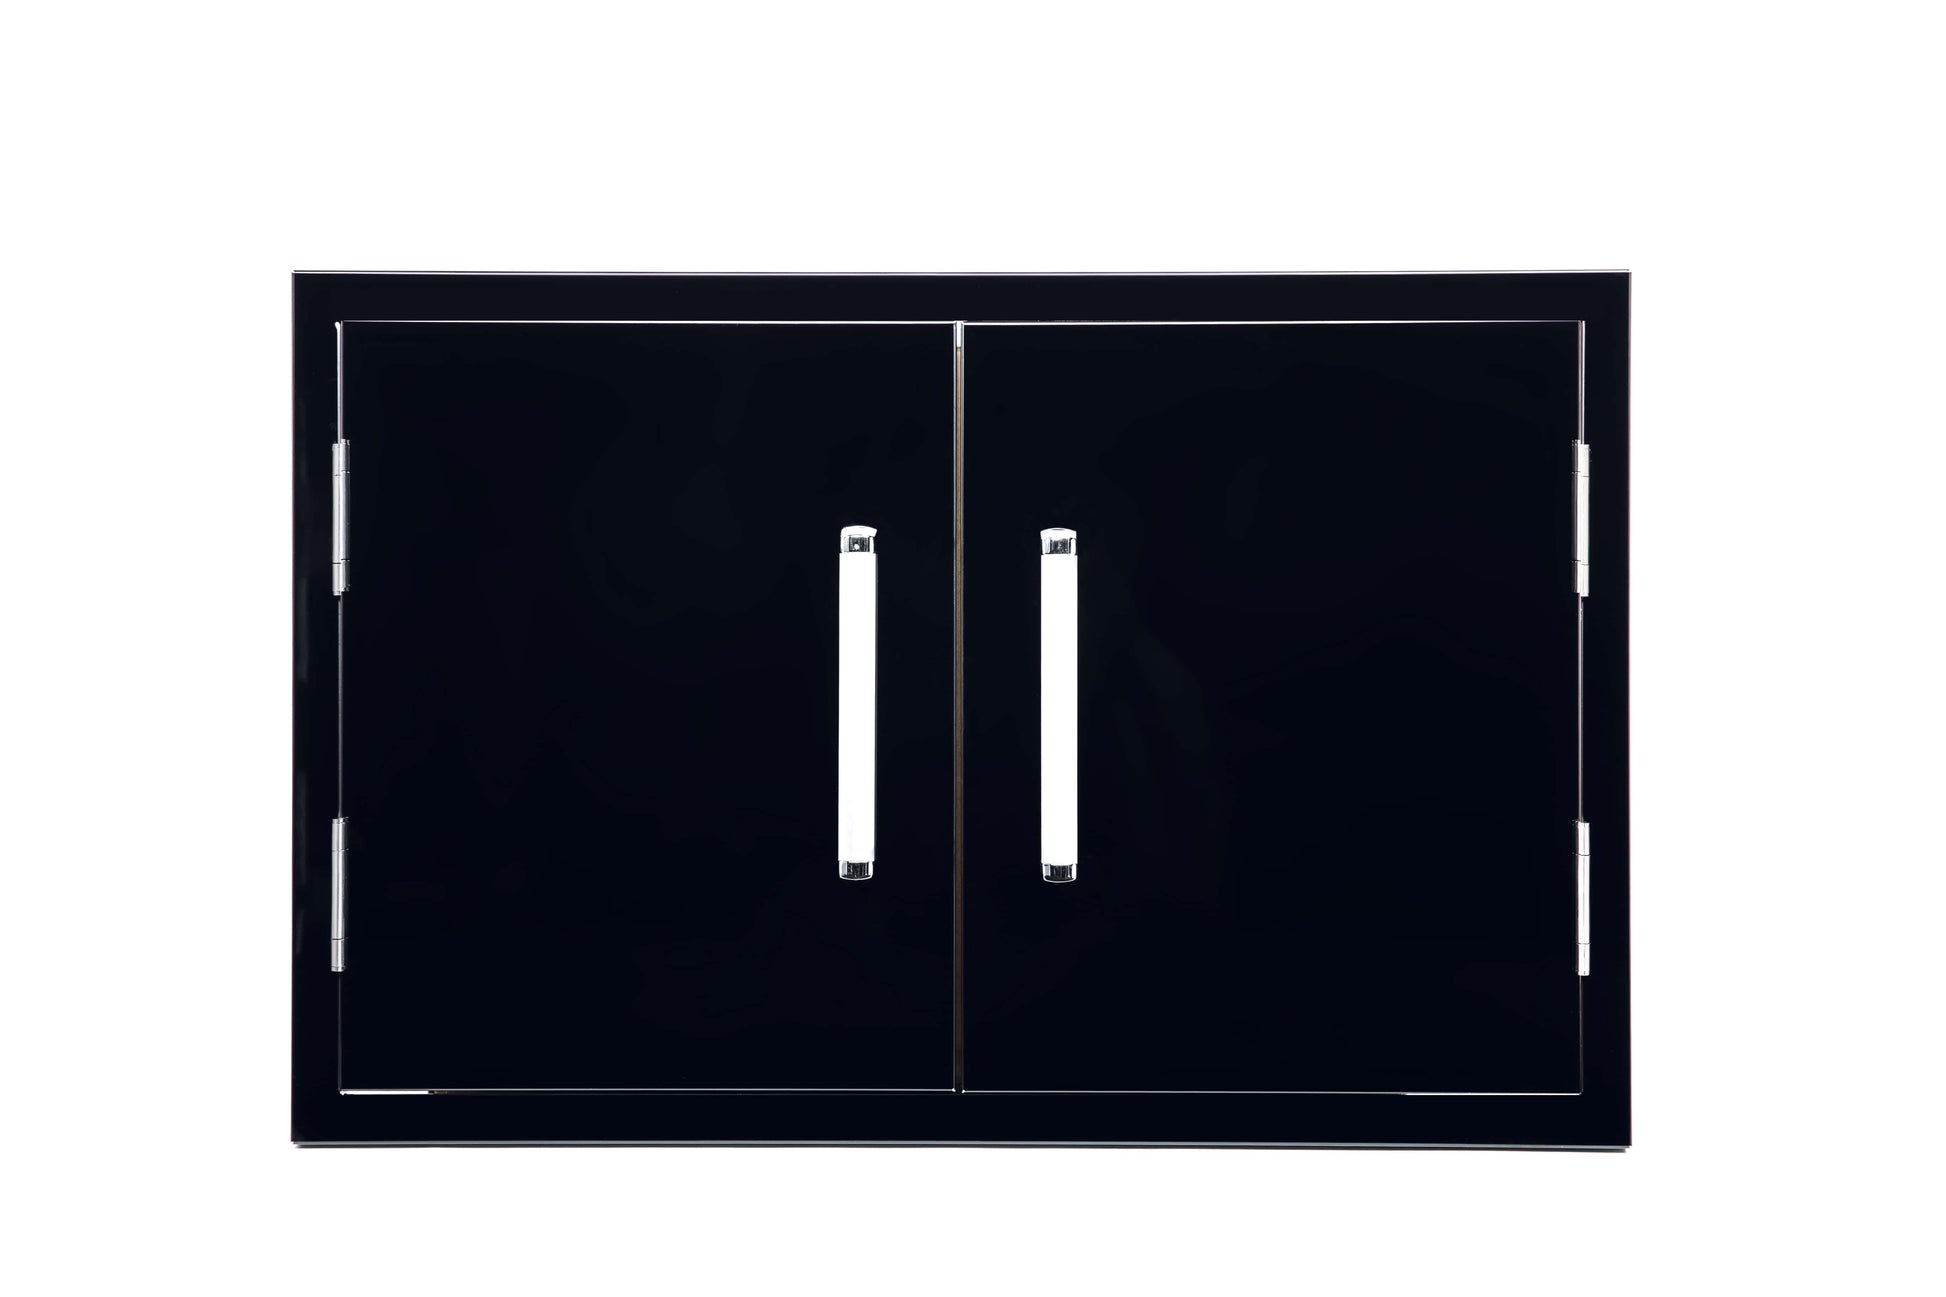 Bonfire Black Stainless Steel Outdoor Kitchen Storage Access door Black Series - CBADD-B - Front